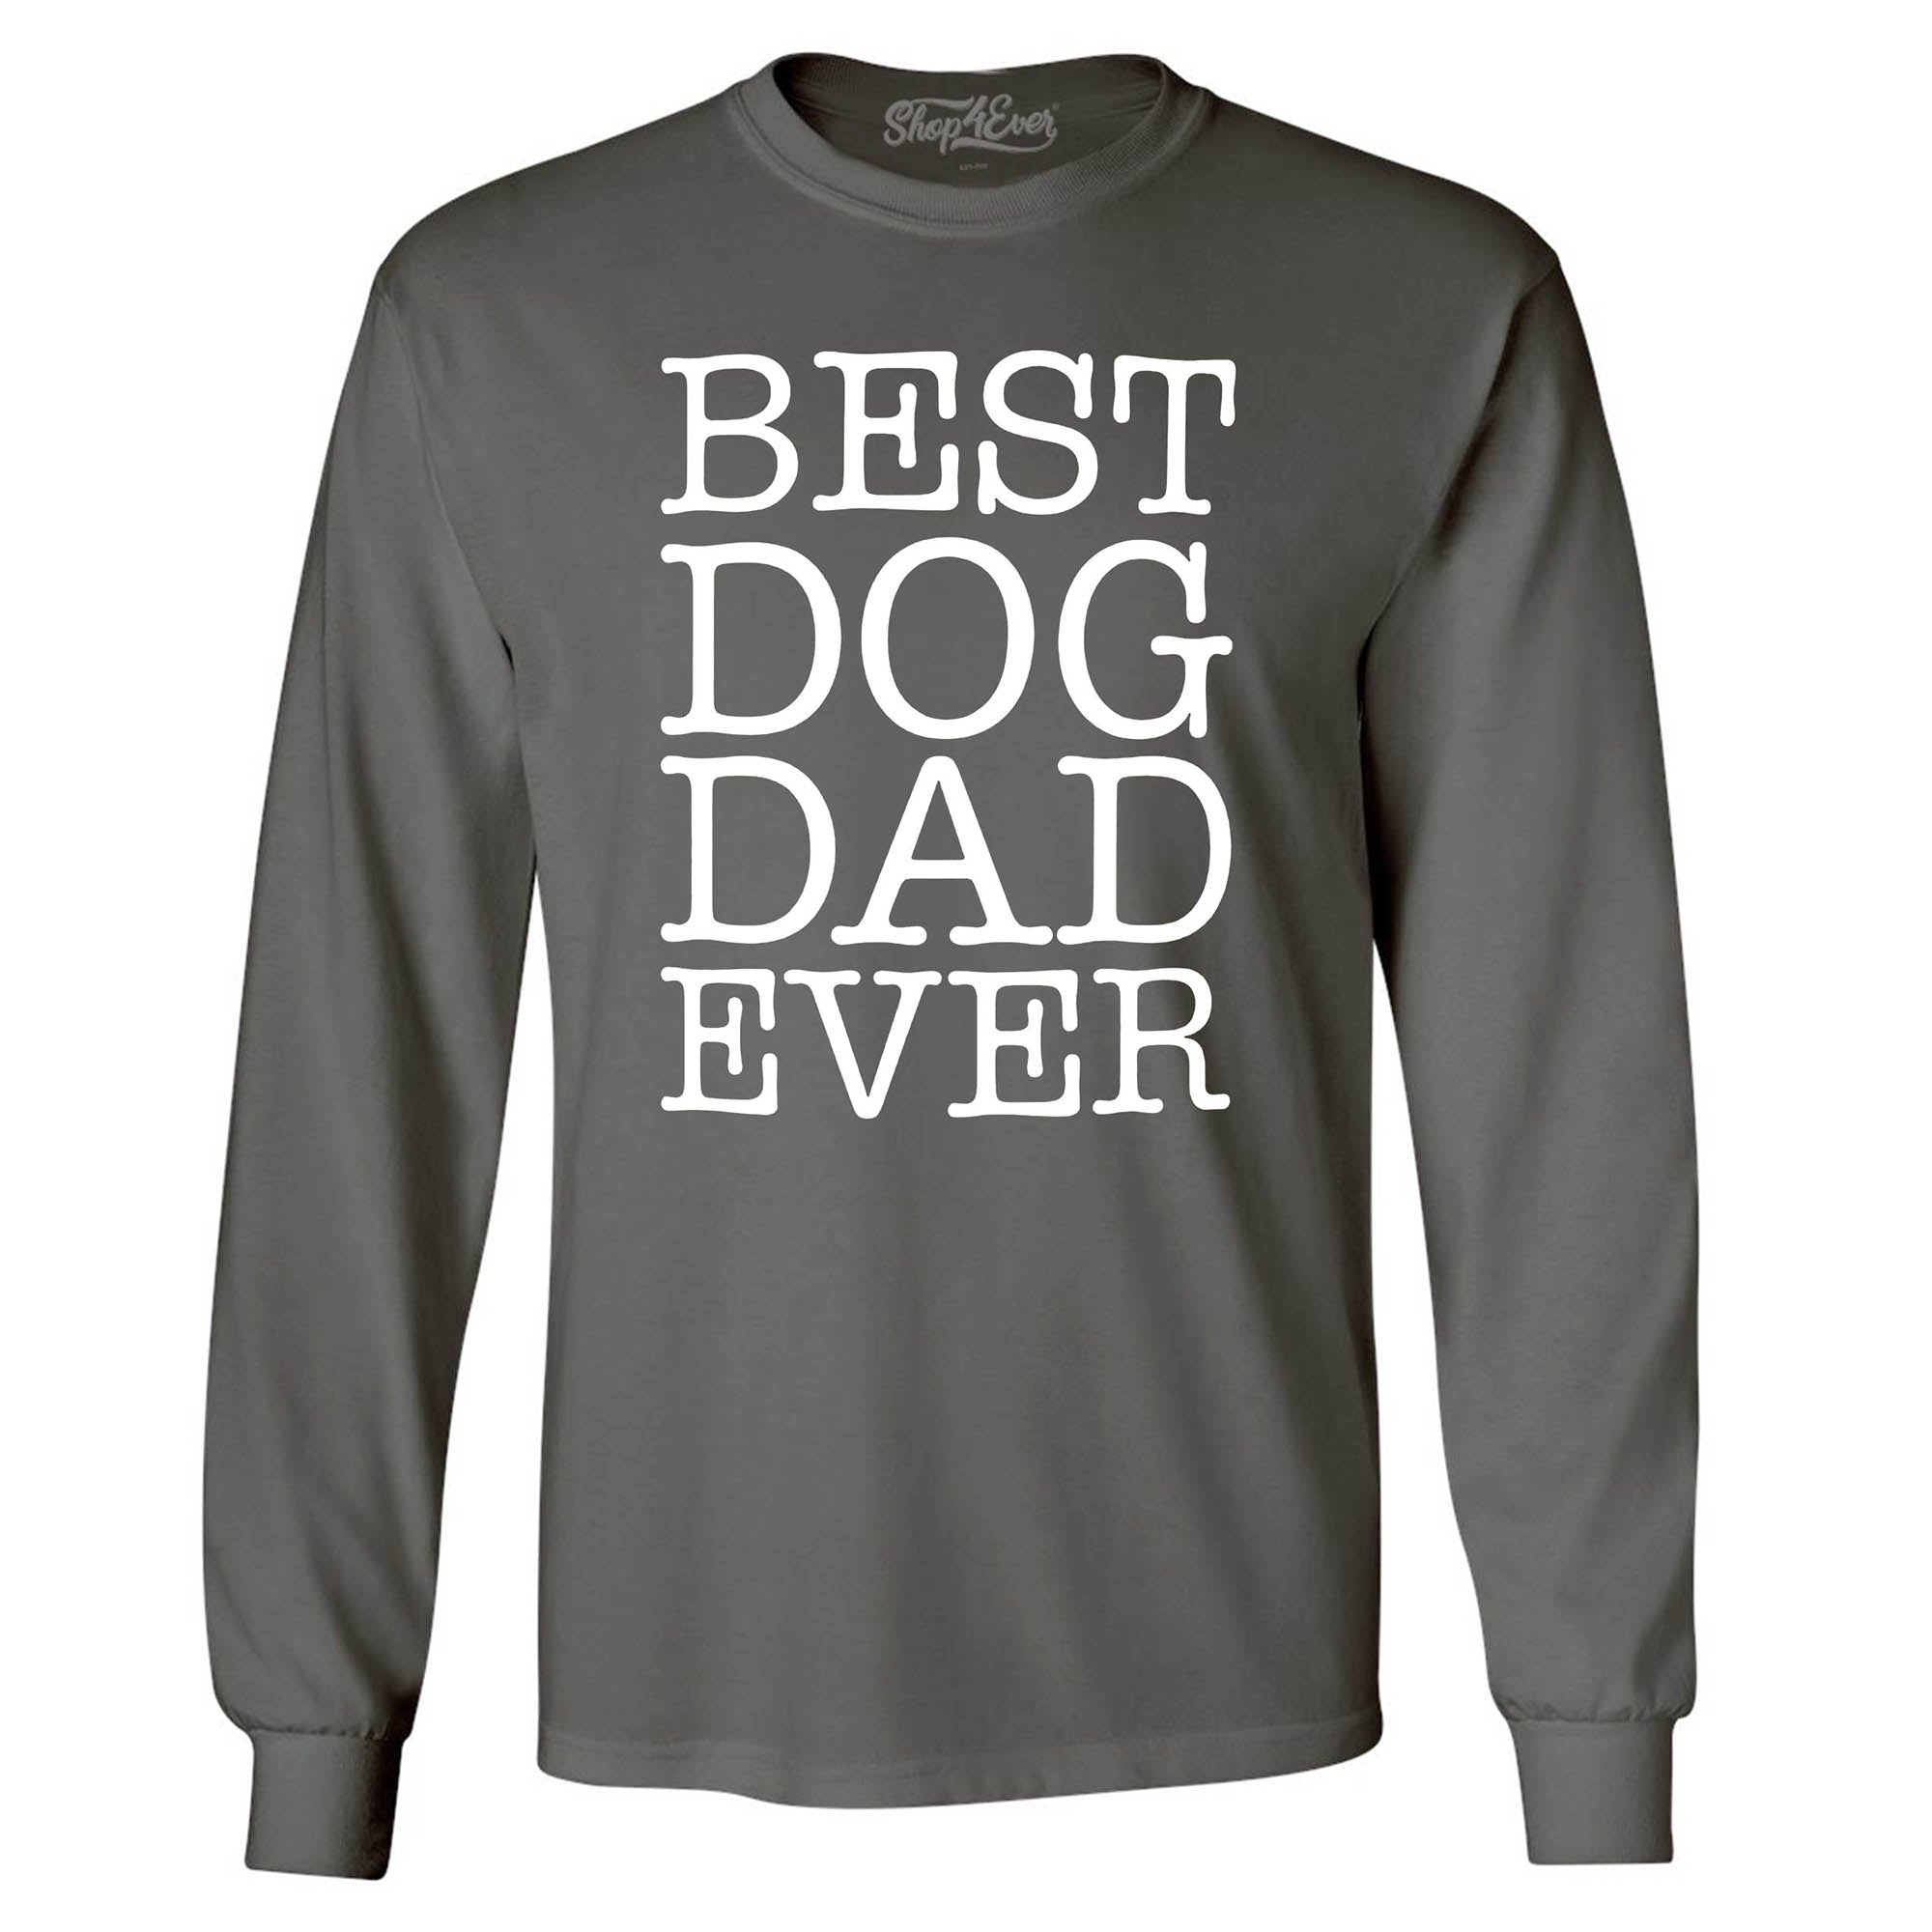 Best Dog Dad Ever Men's Long Sleeve Shirt